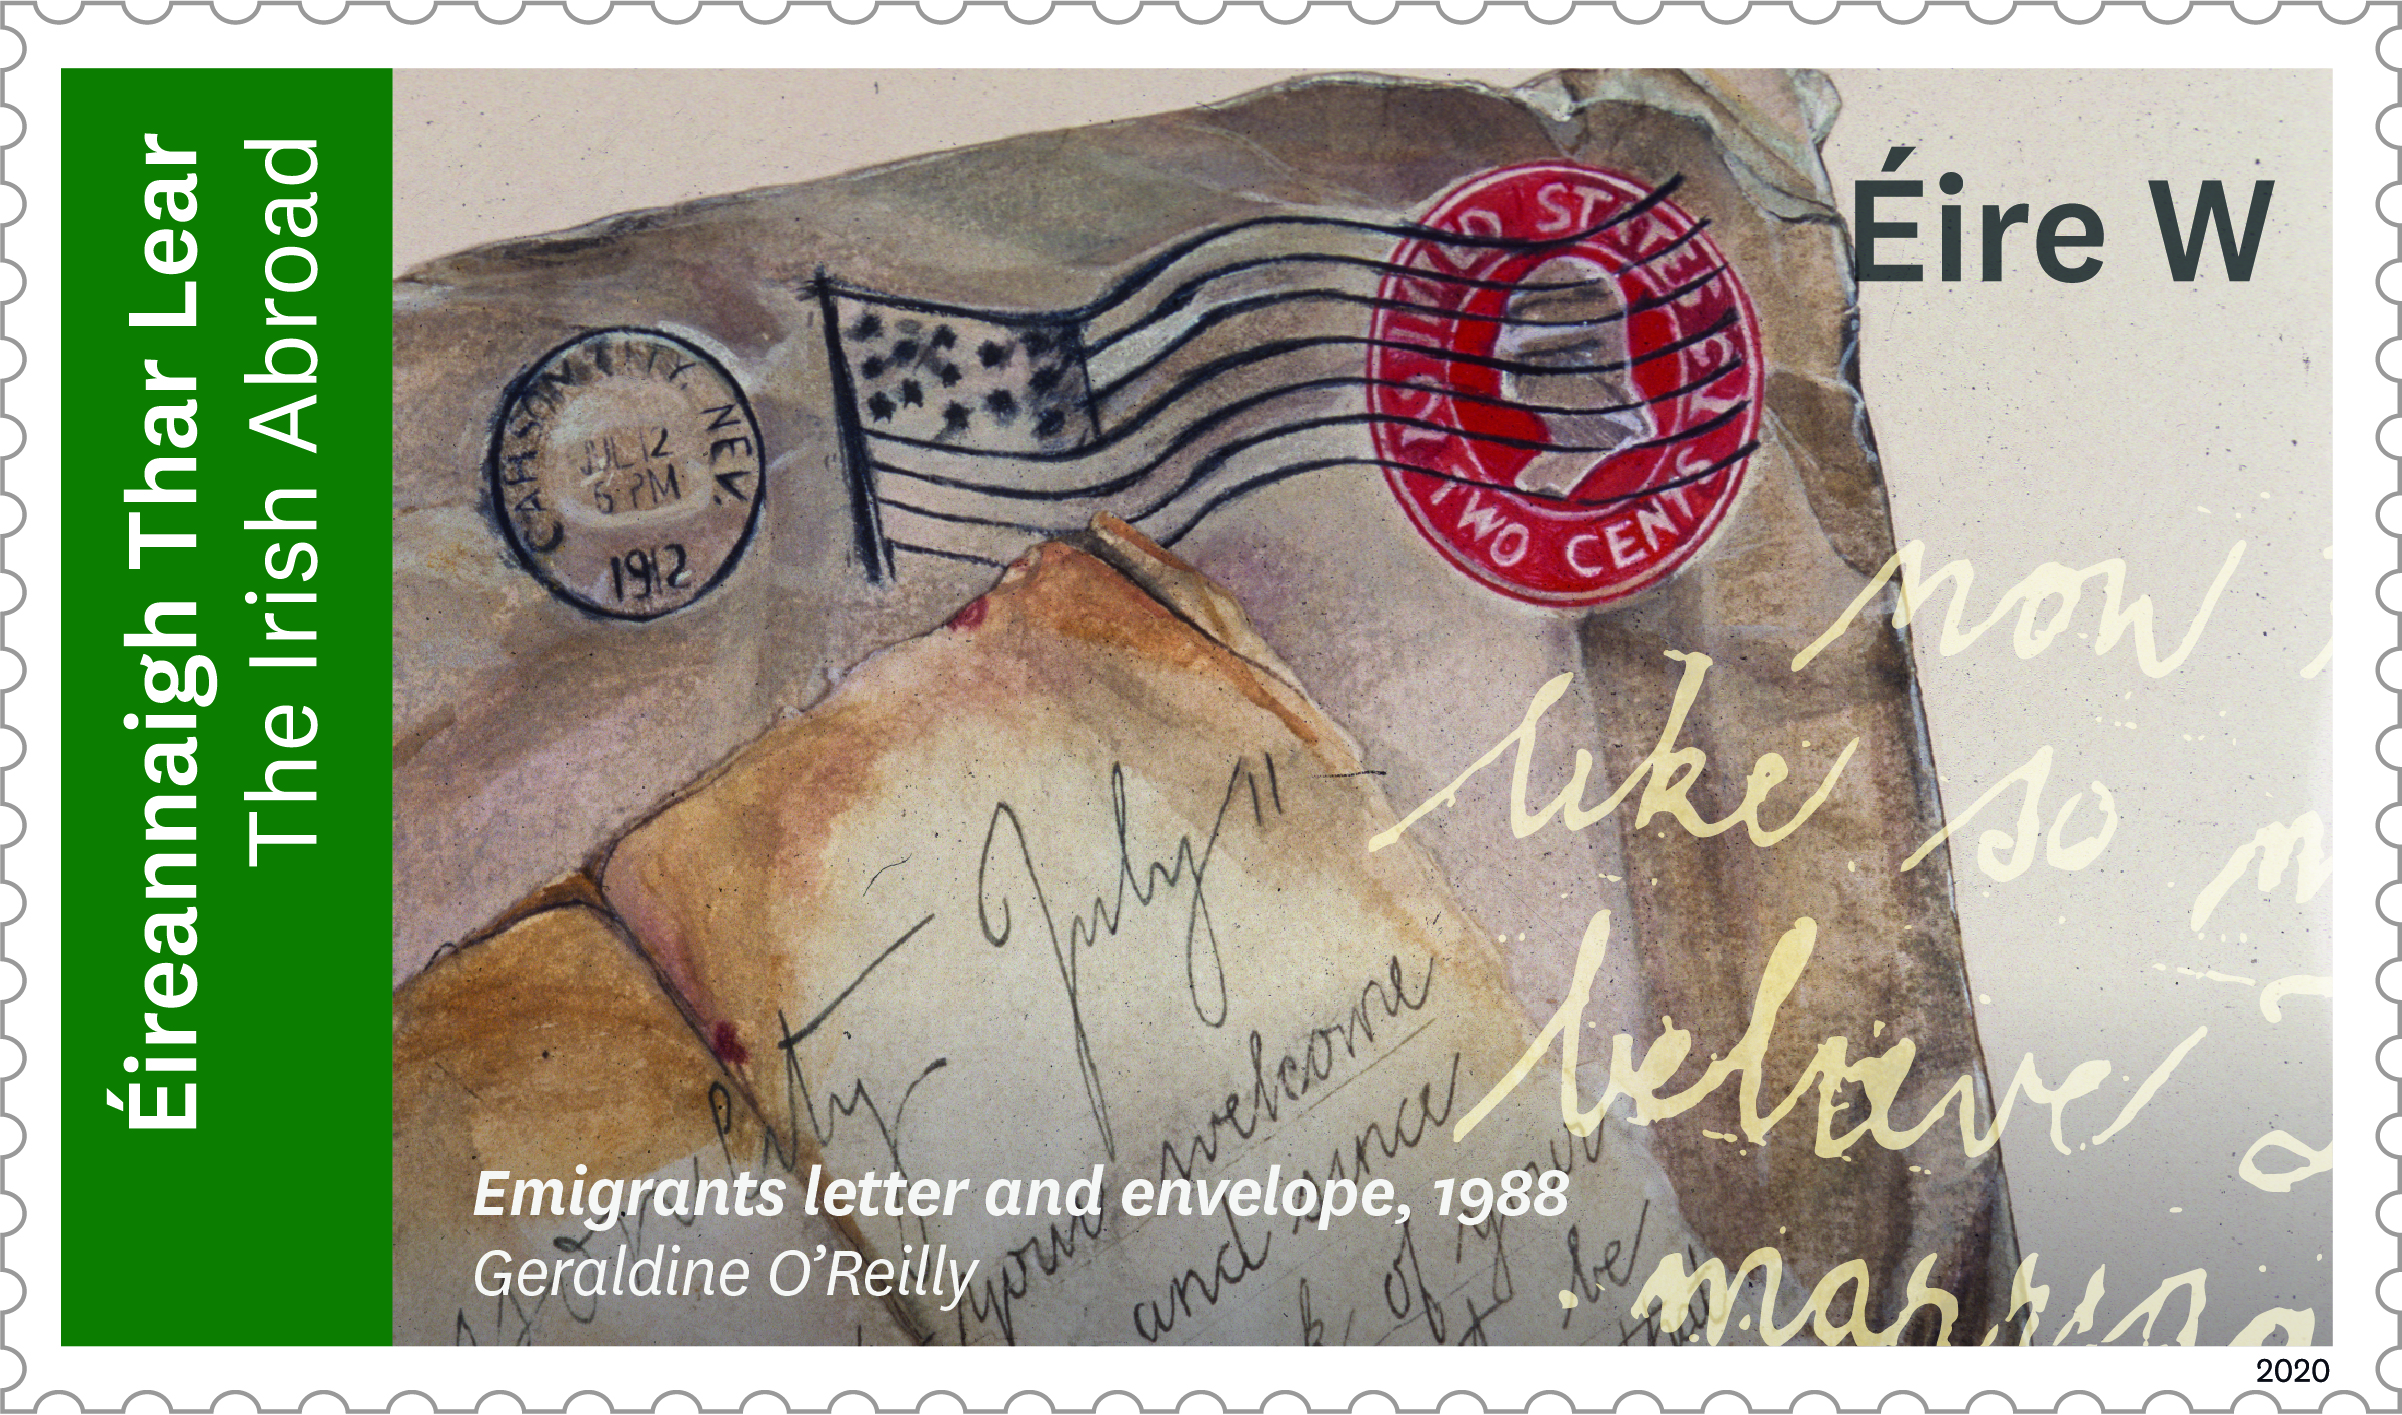 An Post 2020 special edition diaspora postage stamp depicting Emigrants letter and envelope 1988